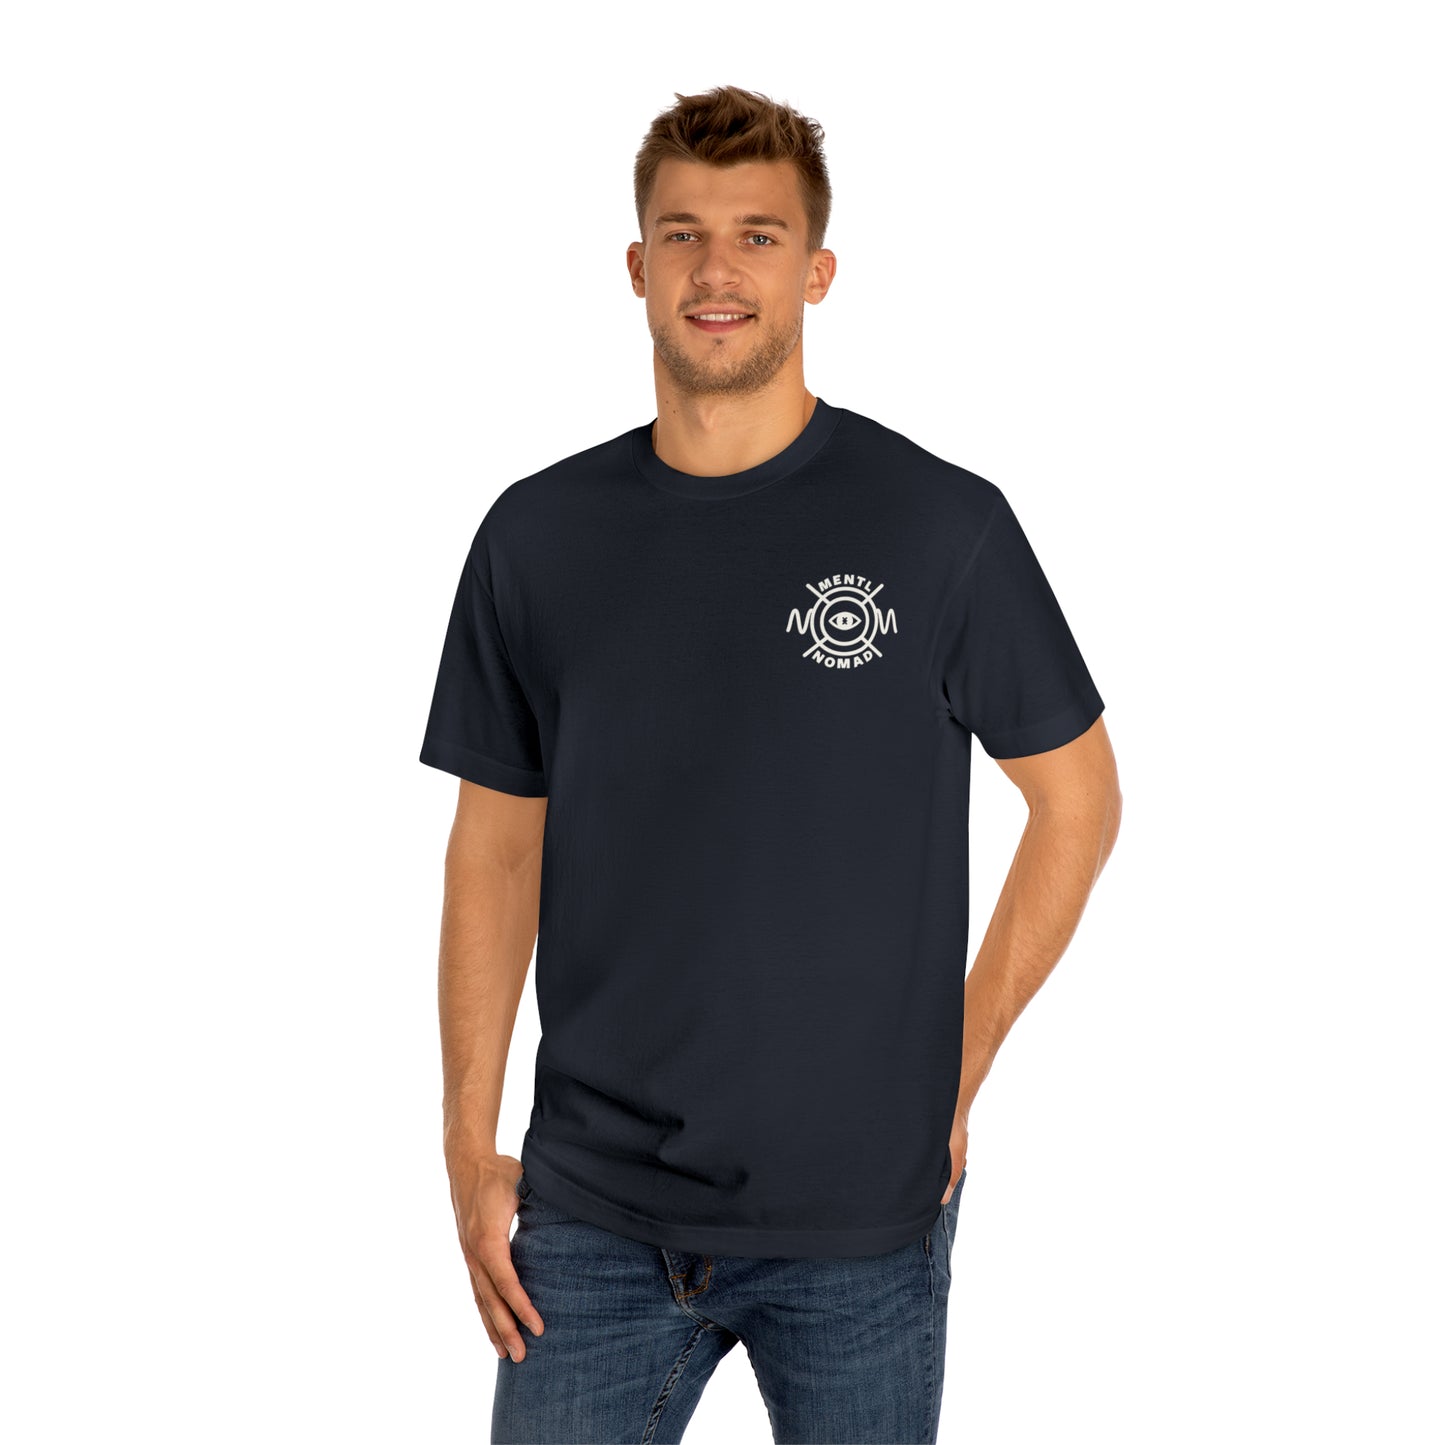 Mentl Nomad Crest (basics dark) T-Shirt